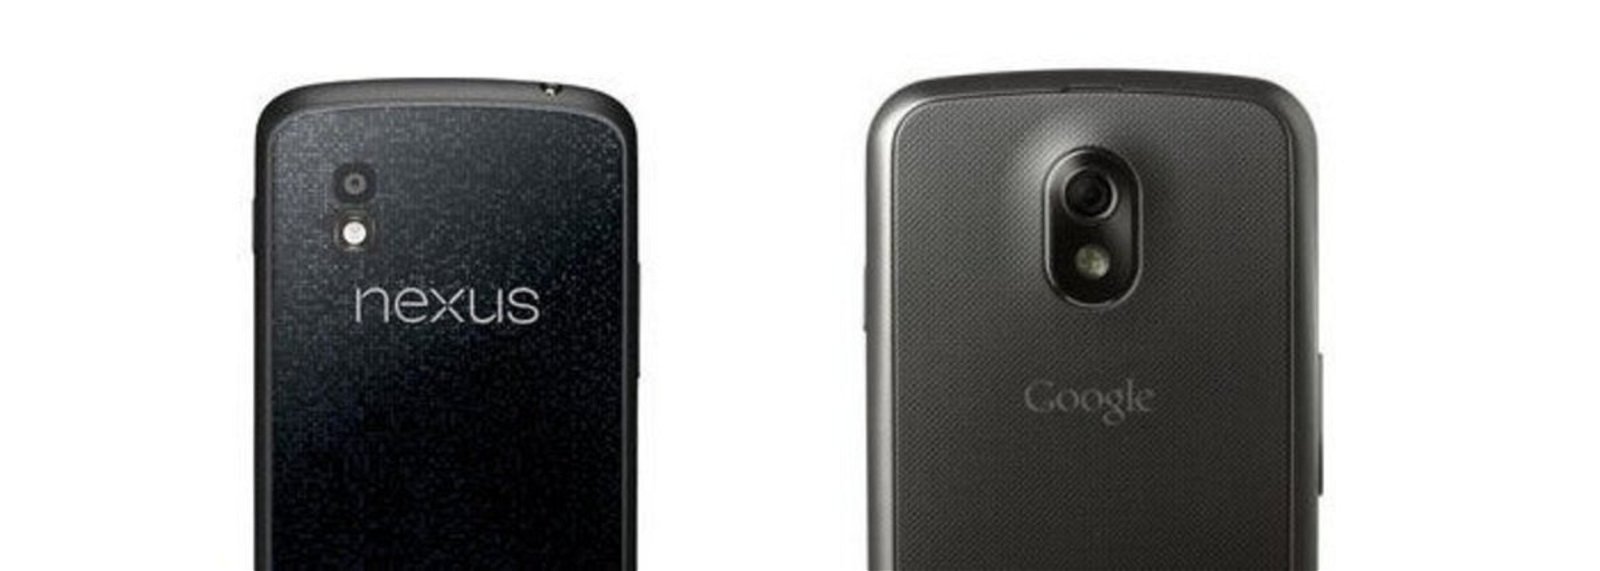 Nexus 4 vs galaxy Nexus camara